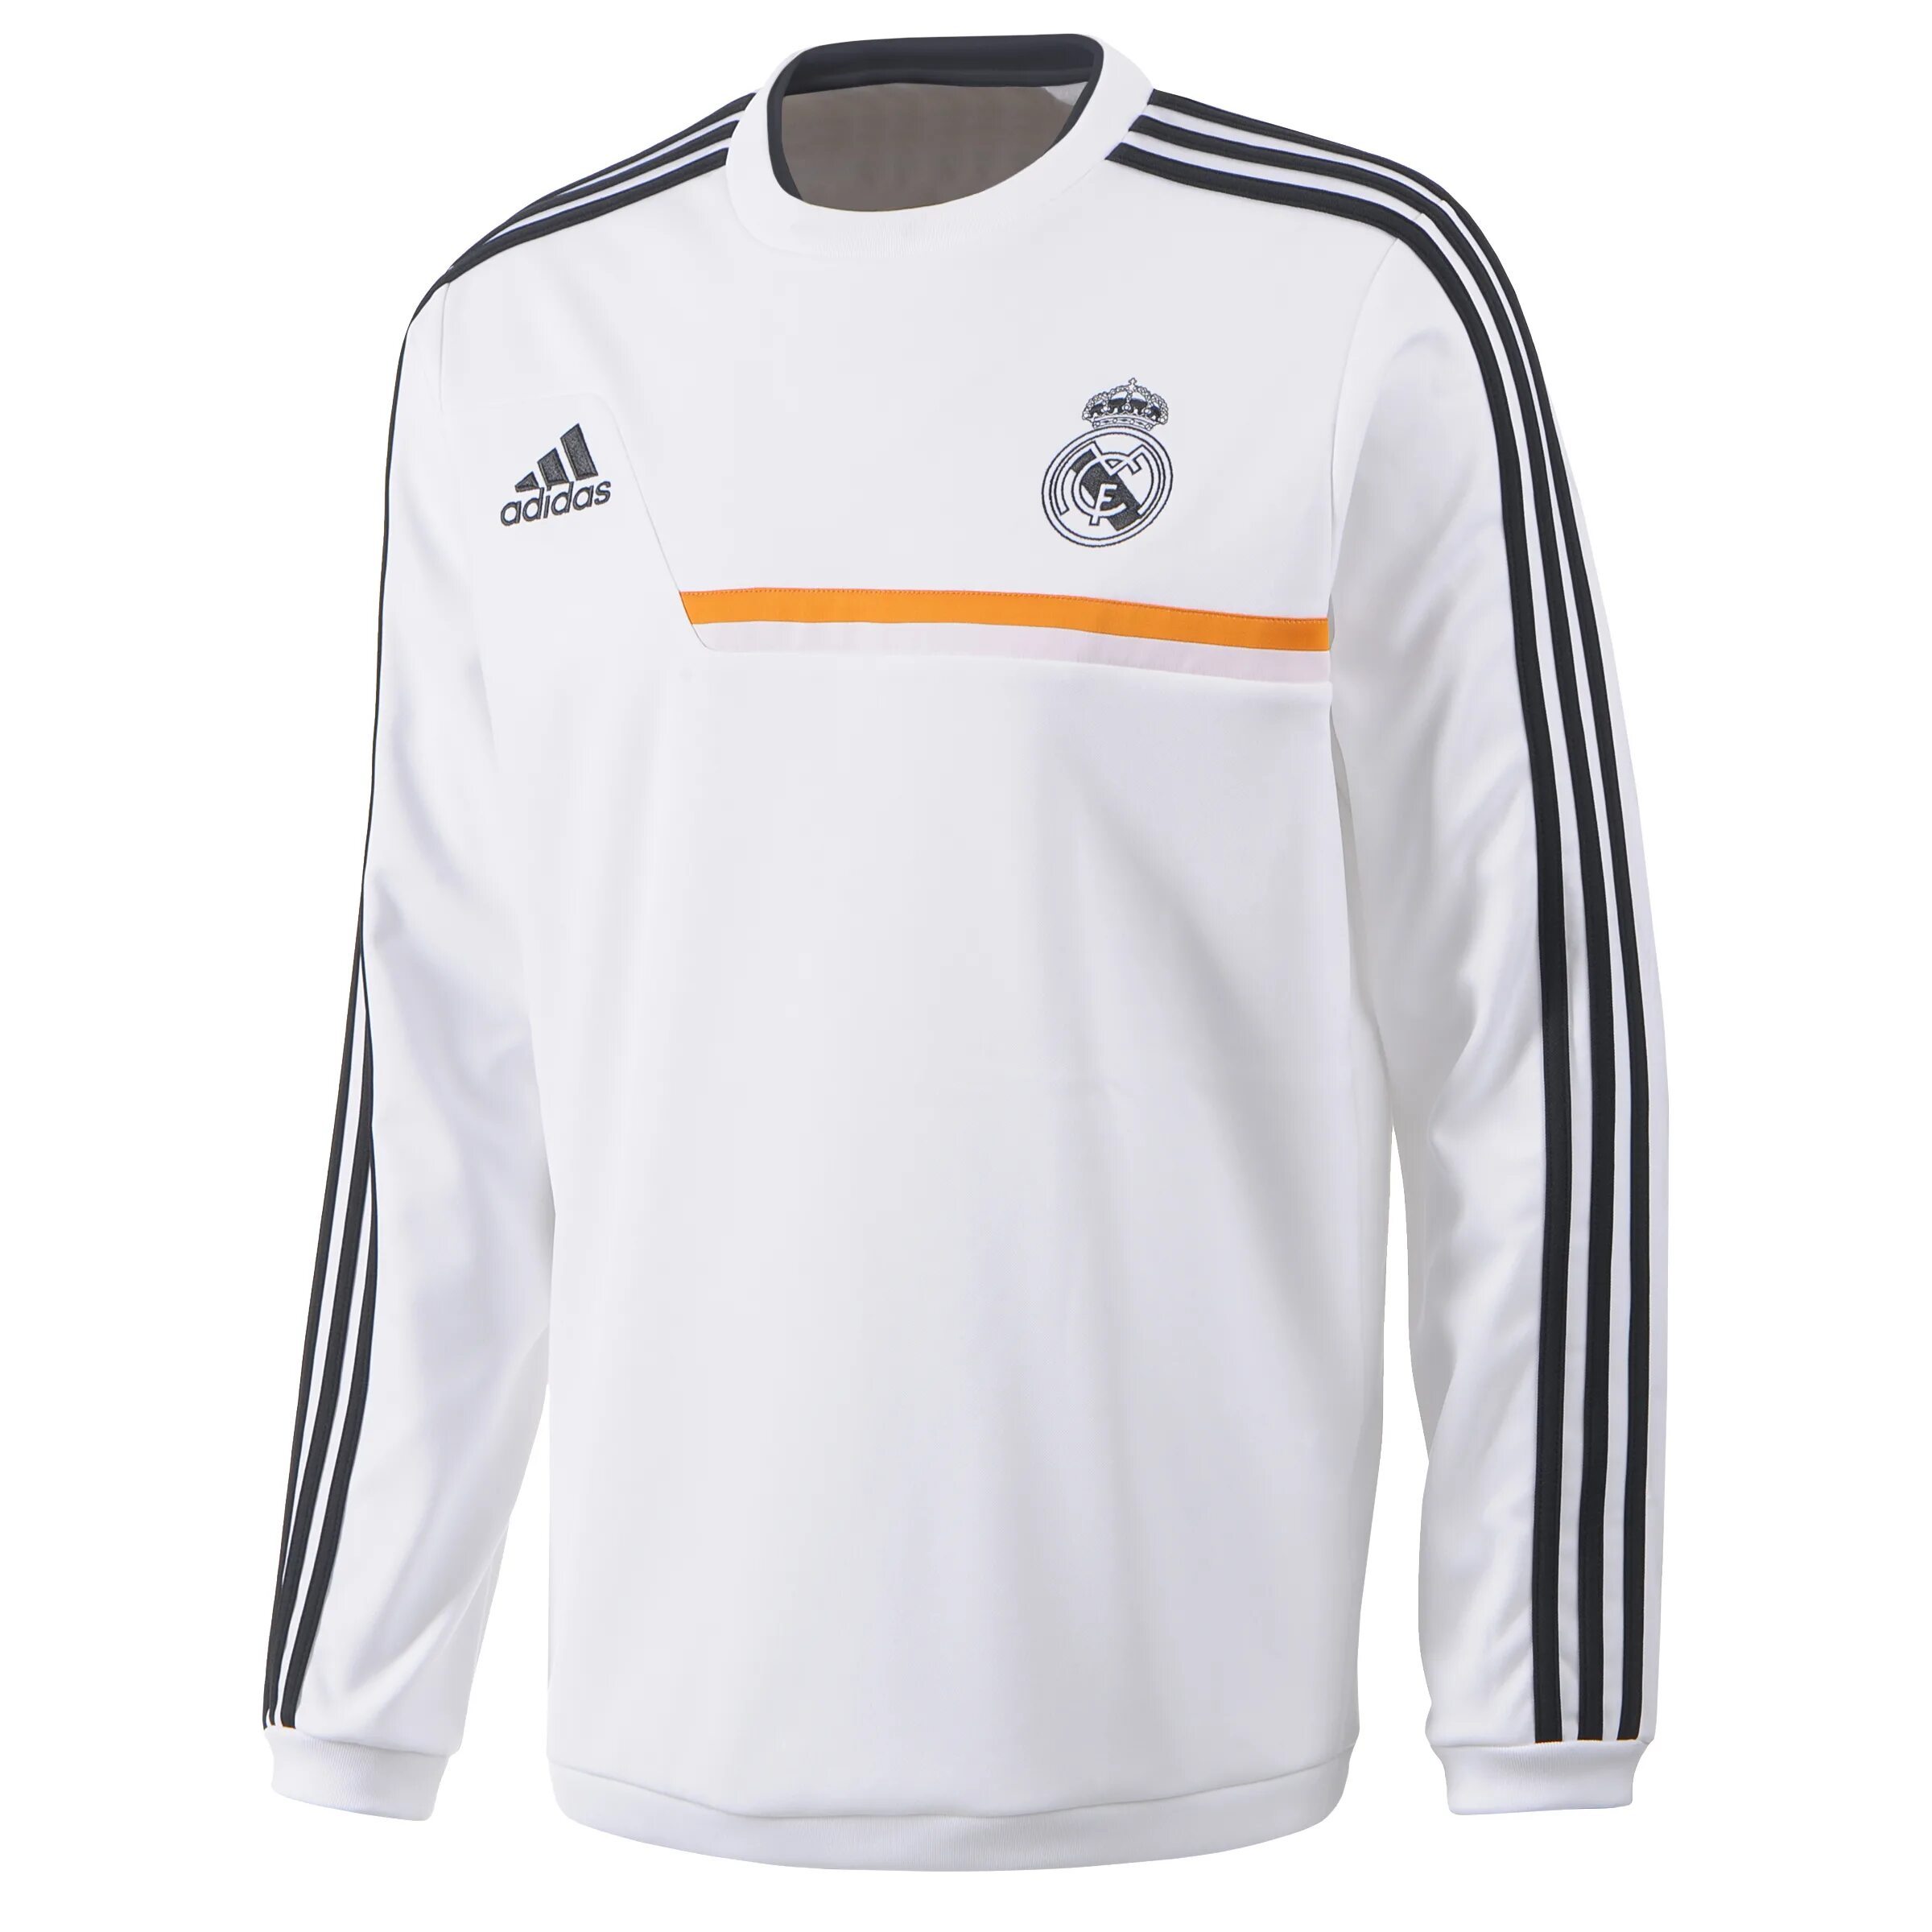 Адидас сборная германии. Adidas real Madrid кофта белая. Кофта Реал Мадрид адидас белая. Кофта Реал Мадрид адидас тренировочная. Олимпийка адидас Реал.